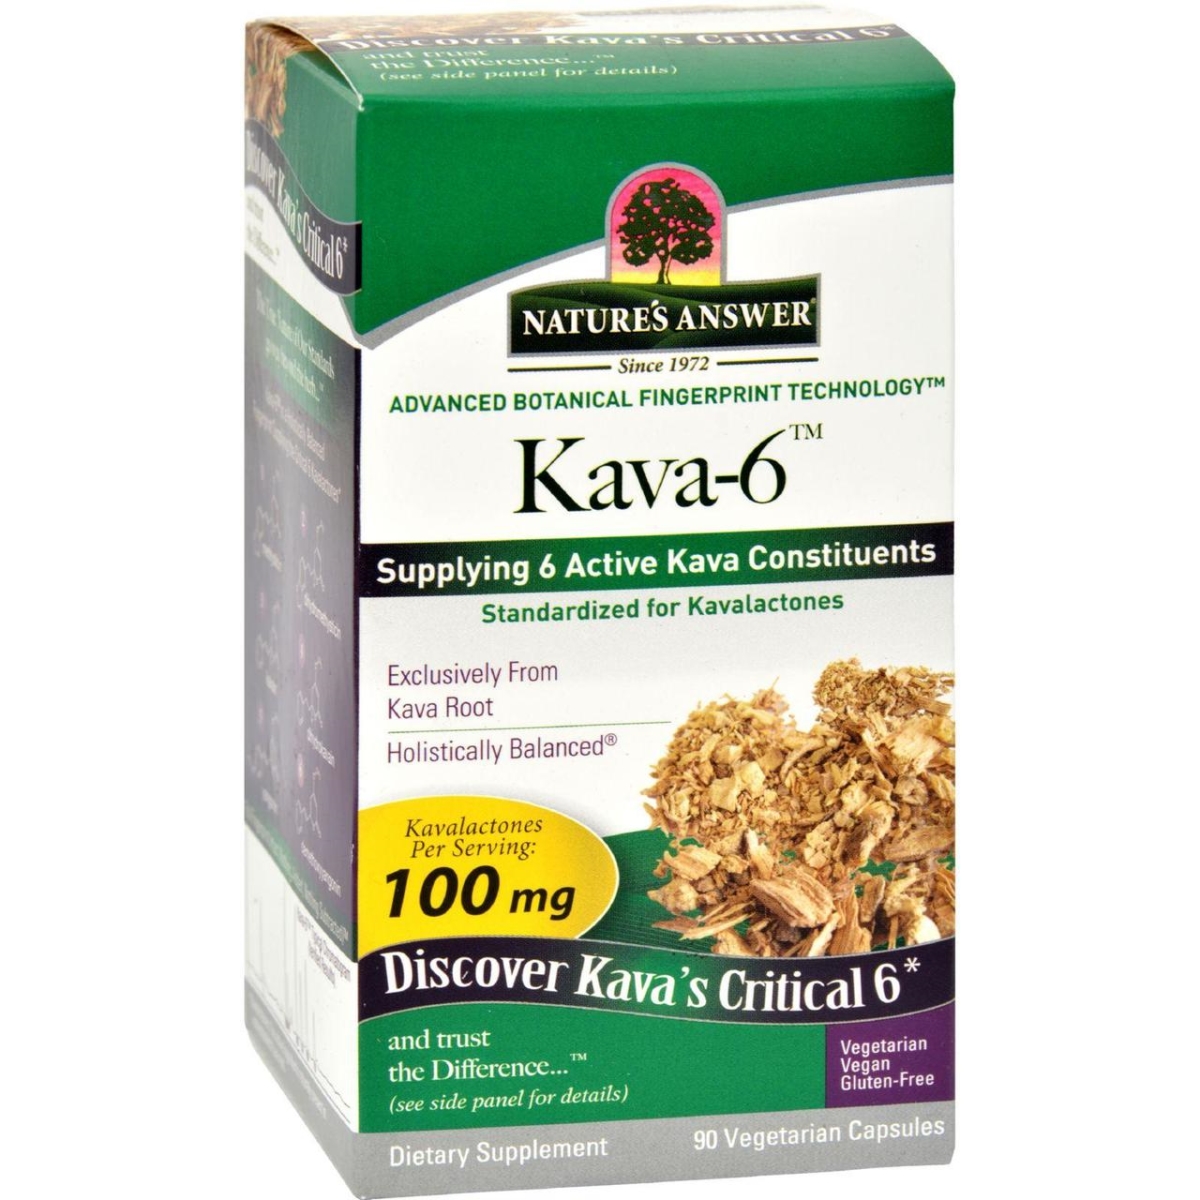 Natures Answer Hg1516251 Kava 6 Capsules, Gluten Free - 90 Vegetarian Capsules